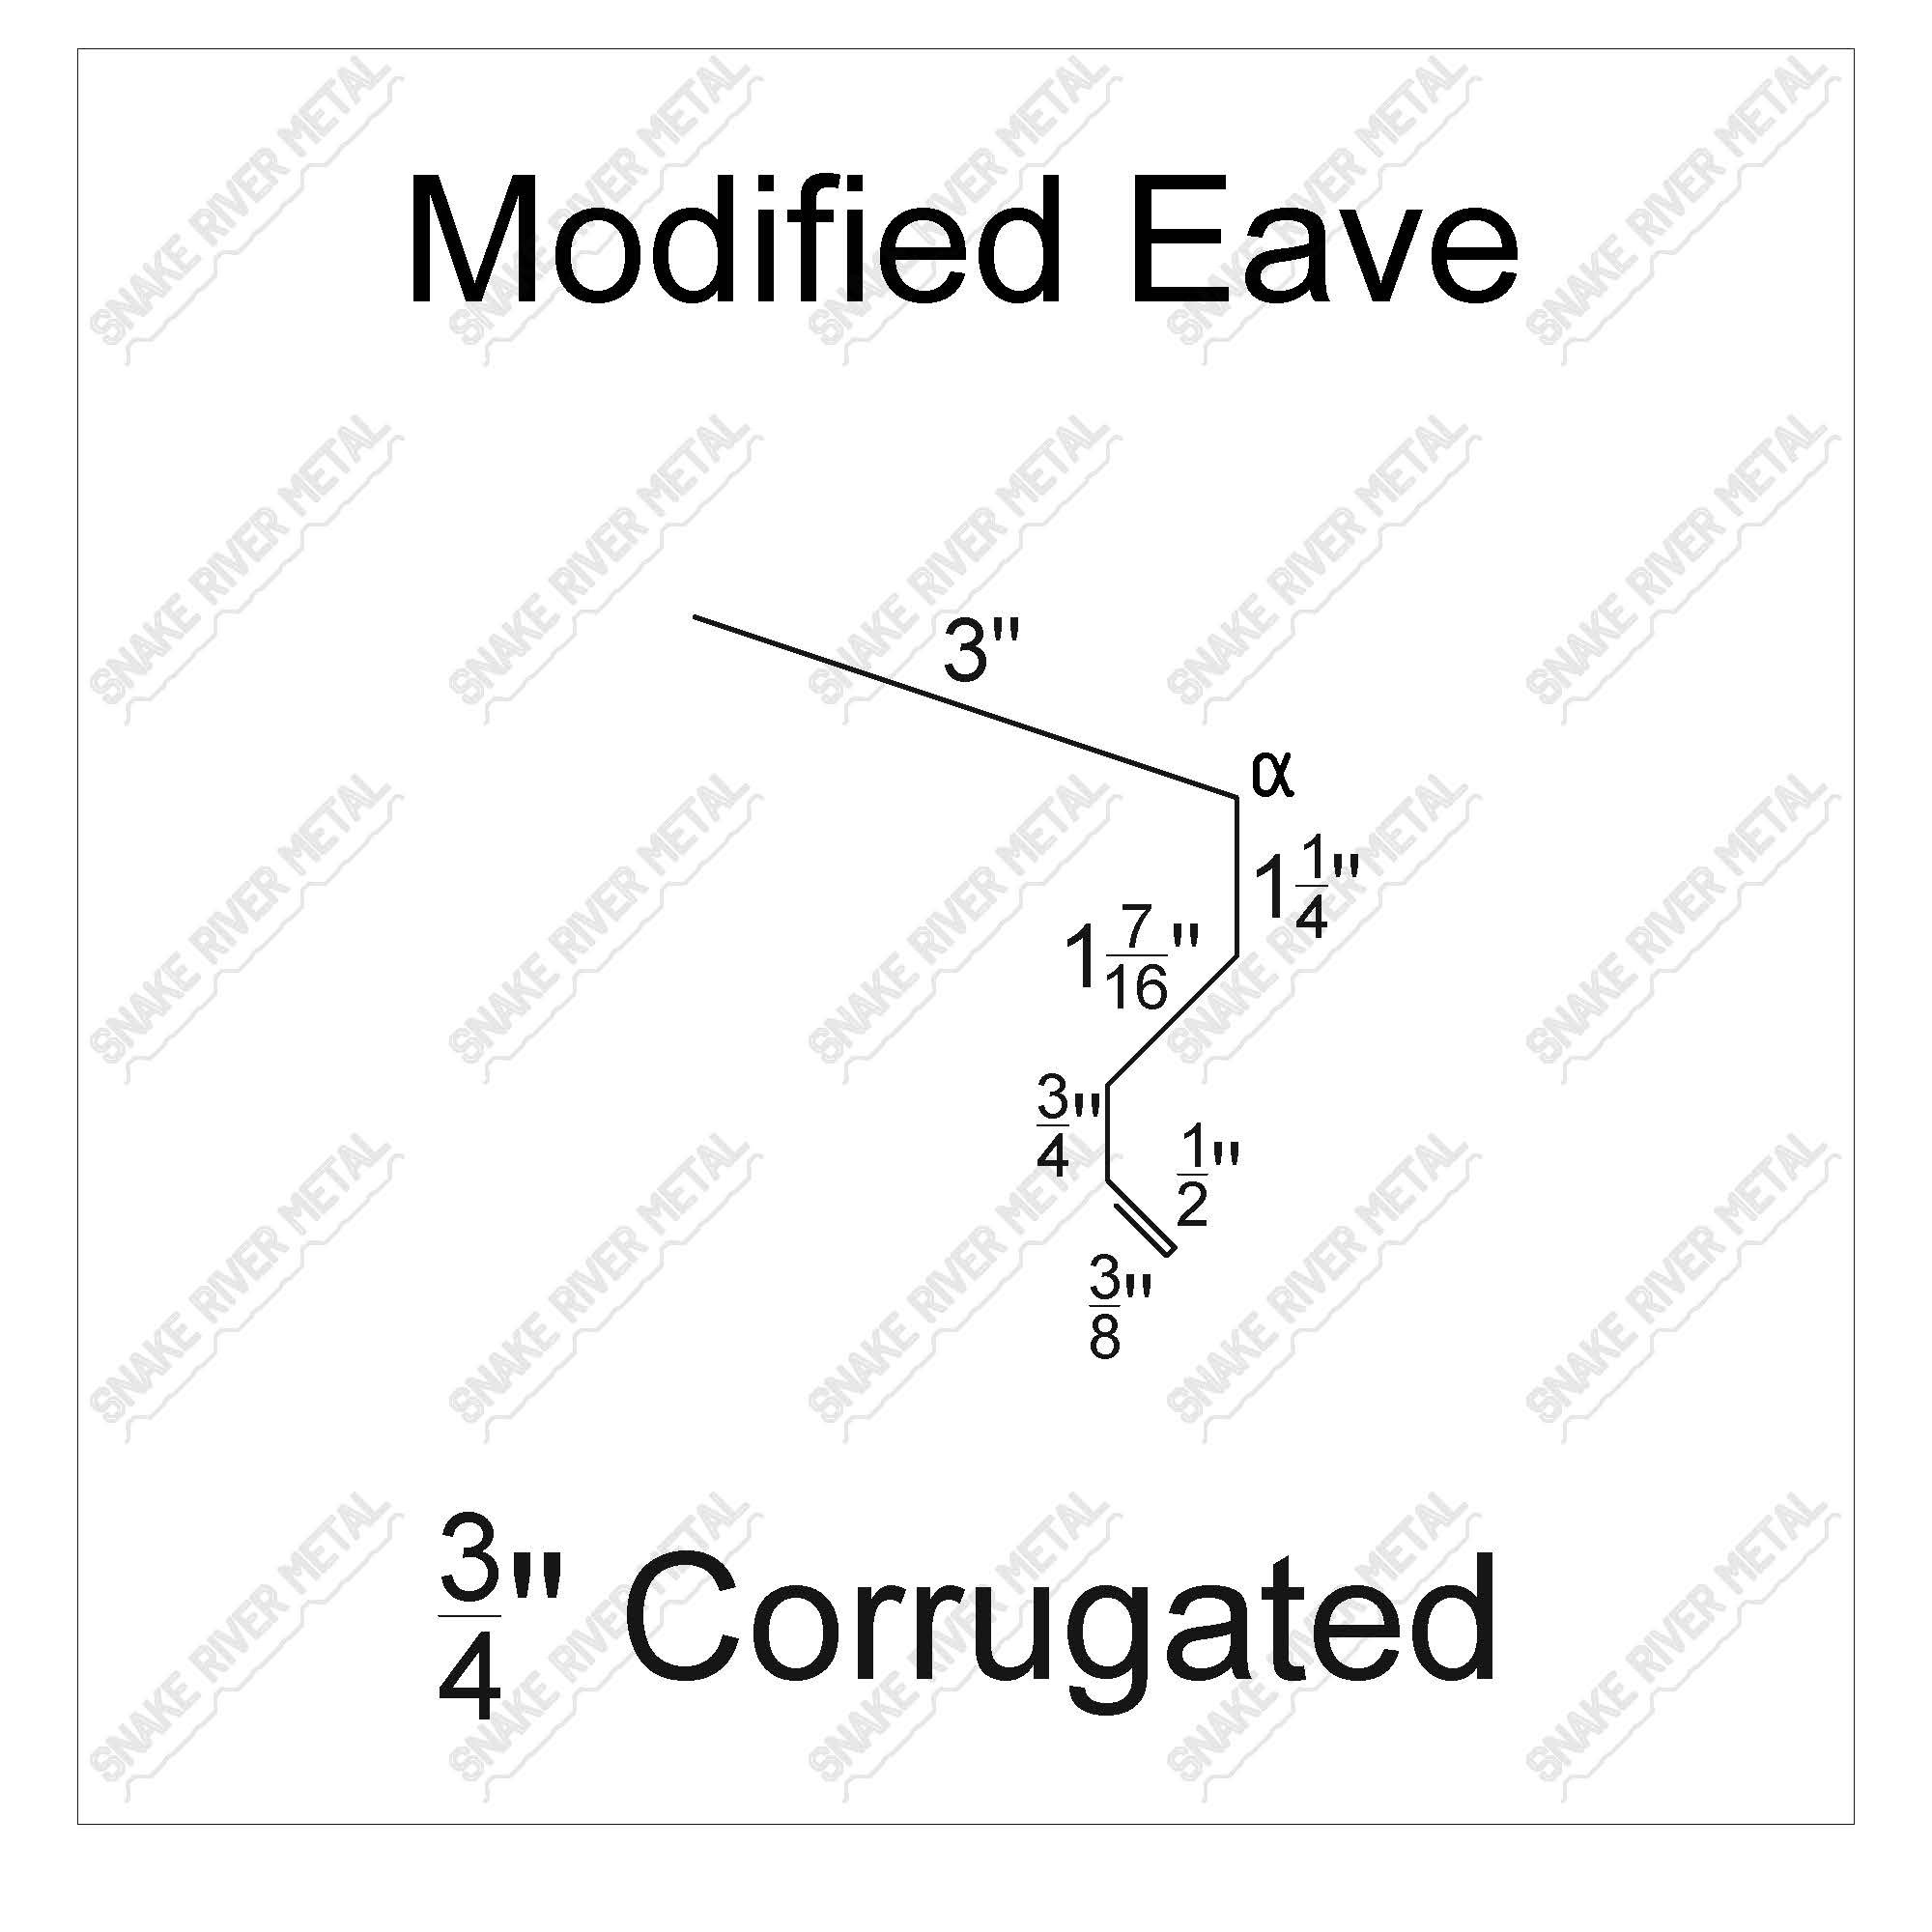 Modified Eave - Corrugated Trim